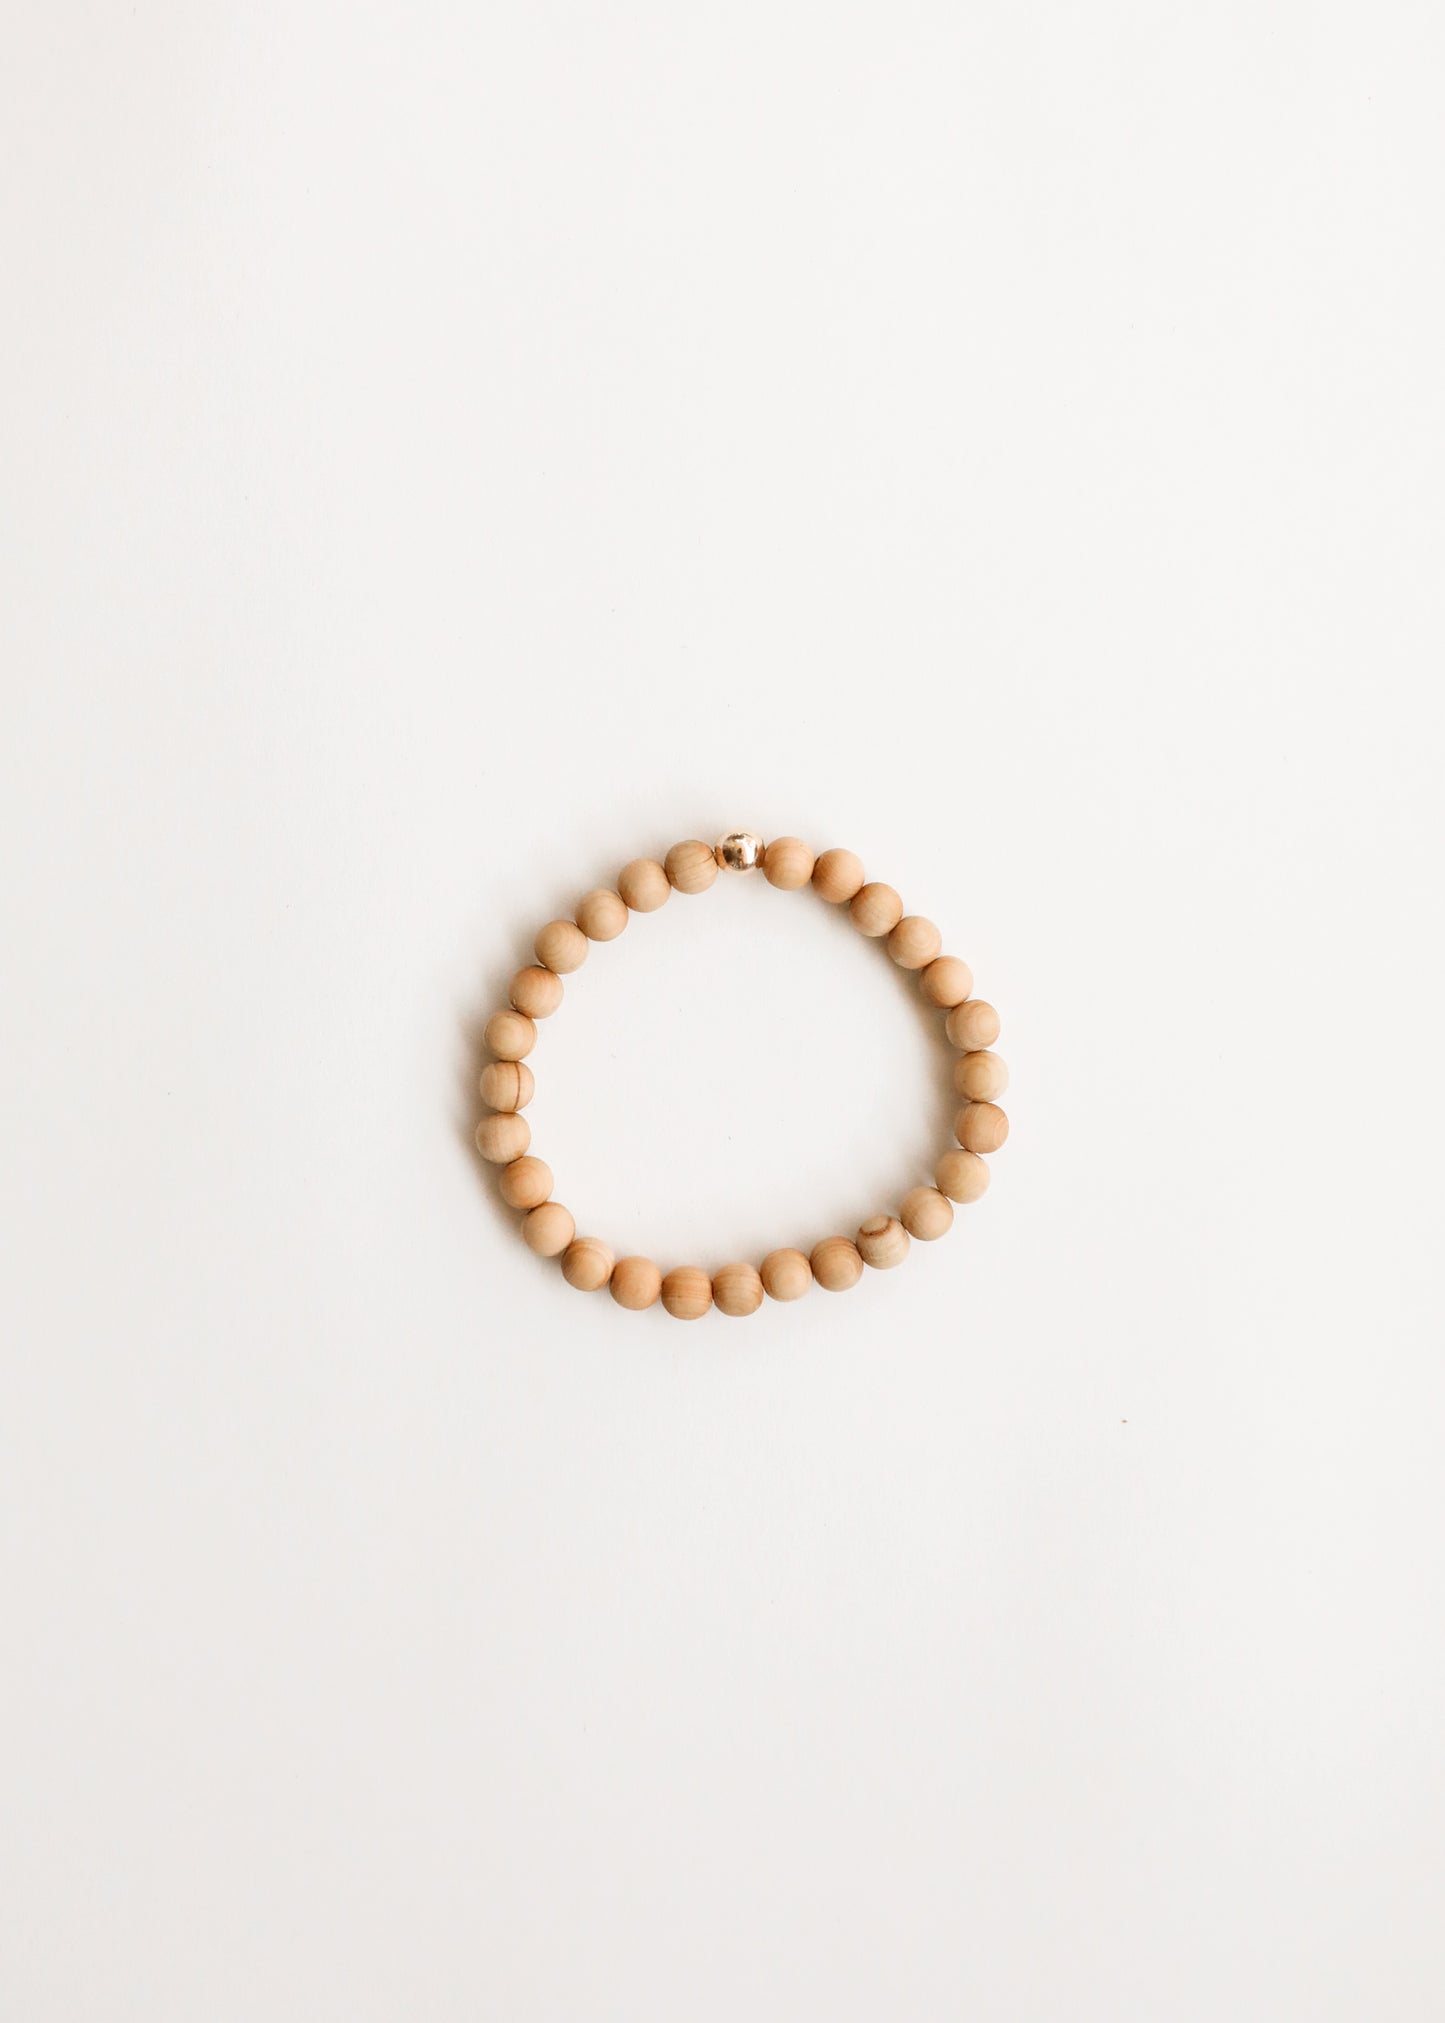 Cypress Wood + Gold || Adult Bracelet